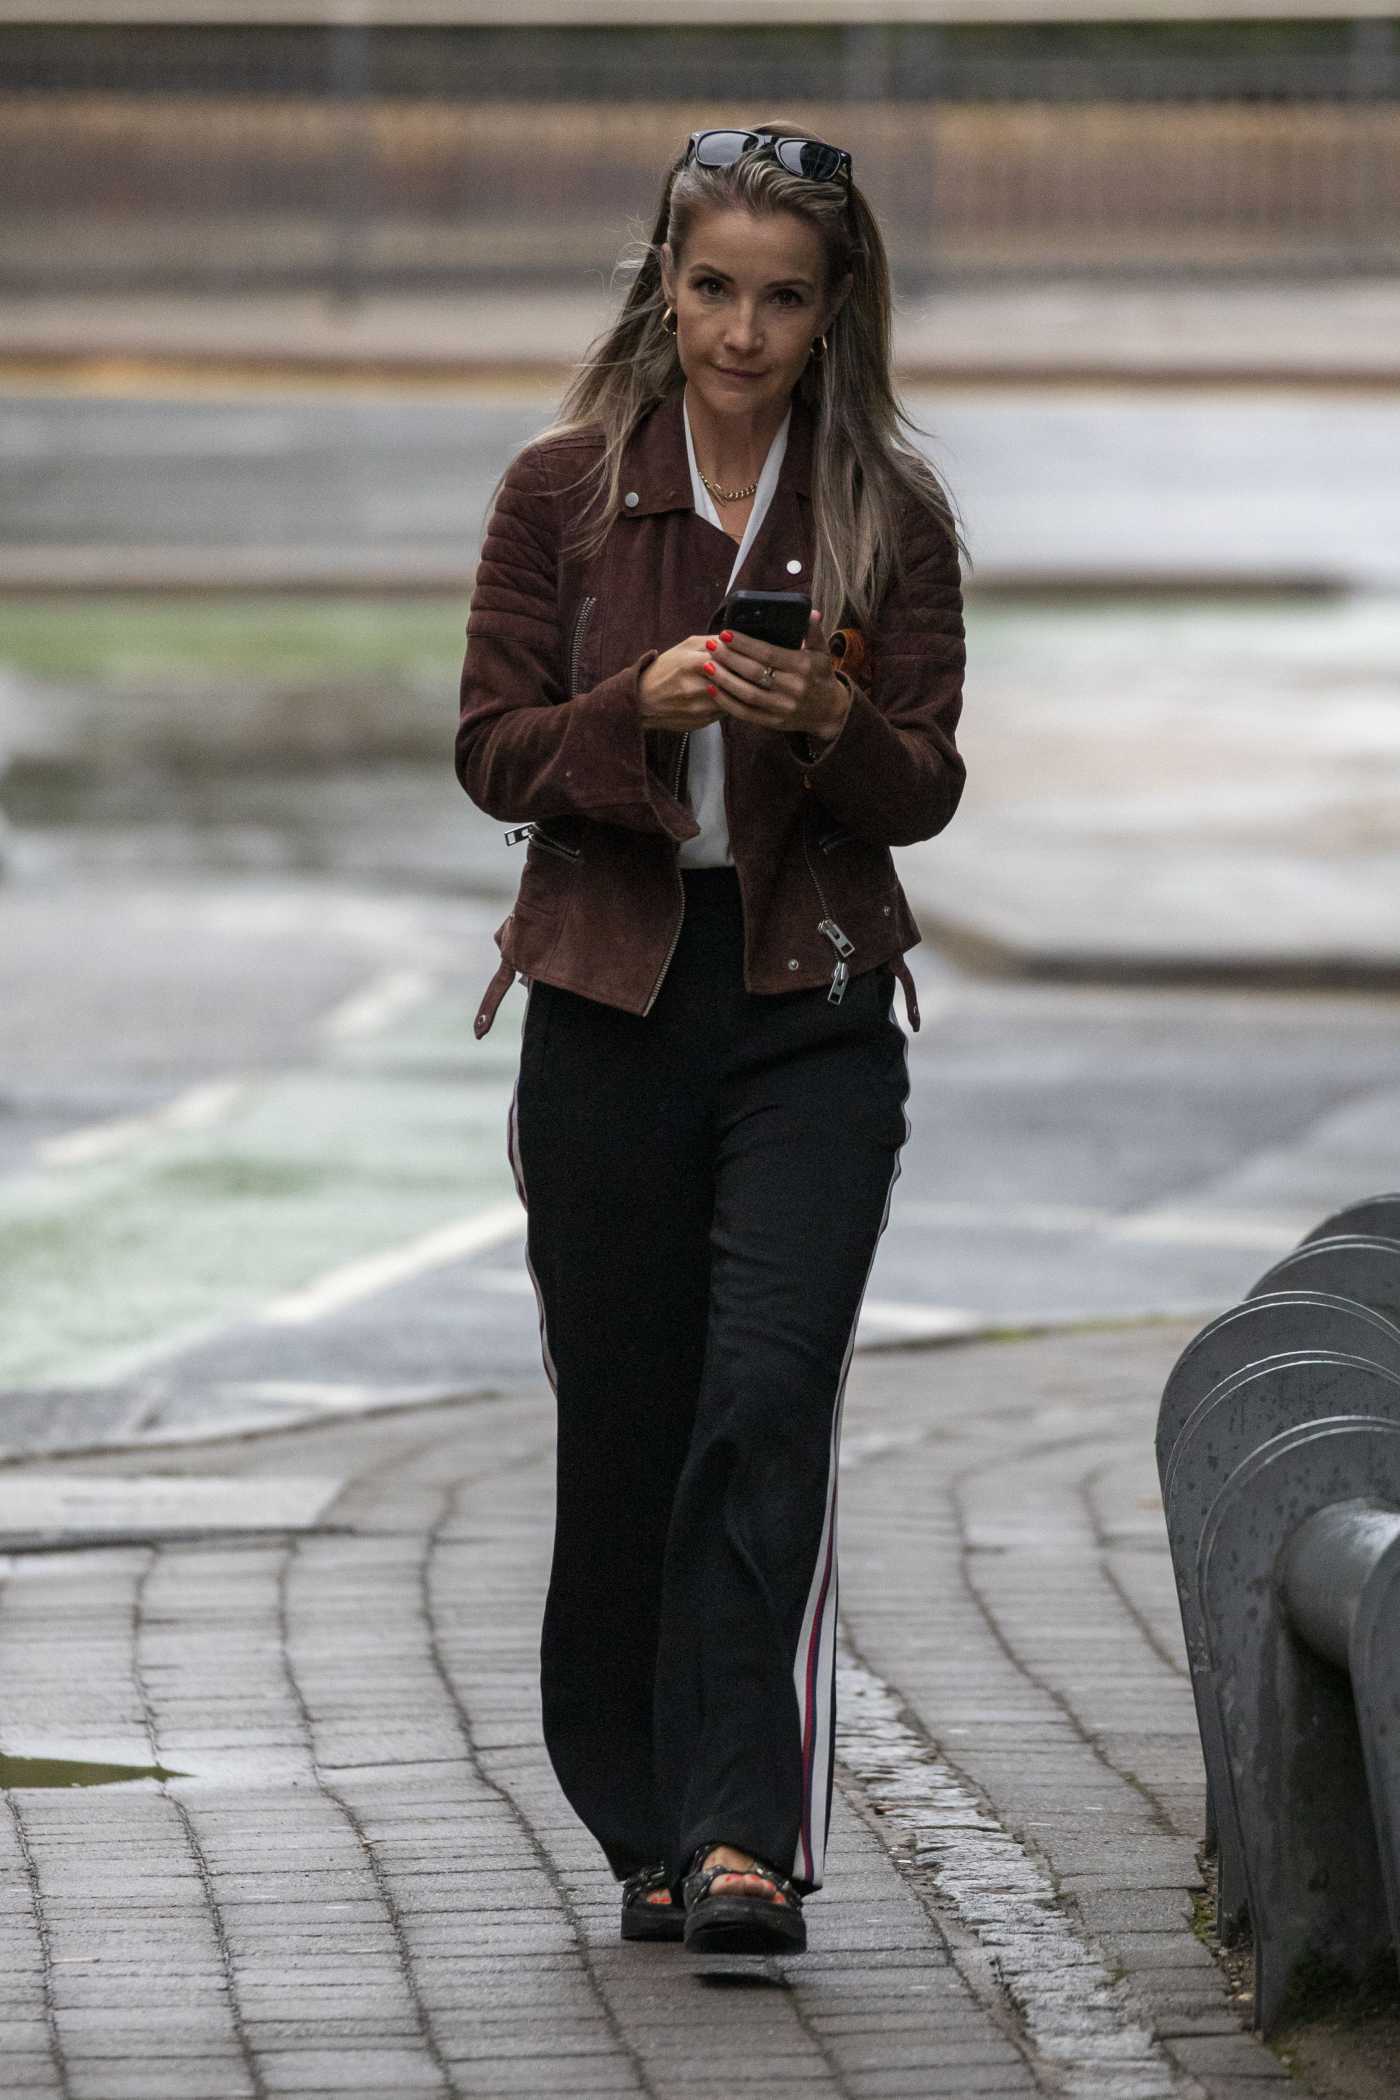 Helen Skelton in a Brown Jacket Arrives at the BBC Studios in Leeds 09/04/2022